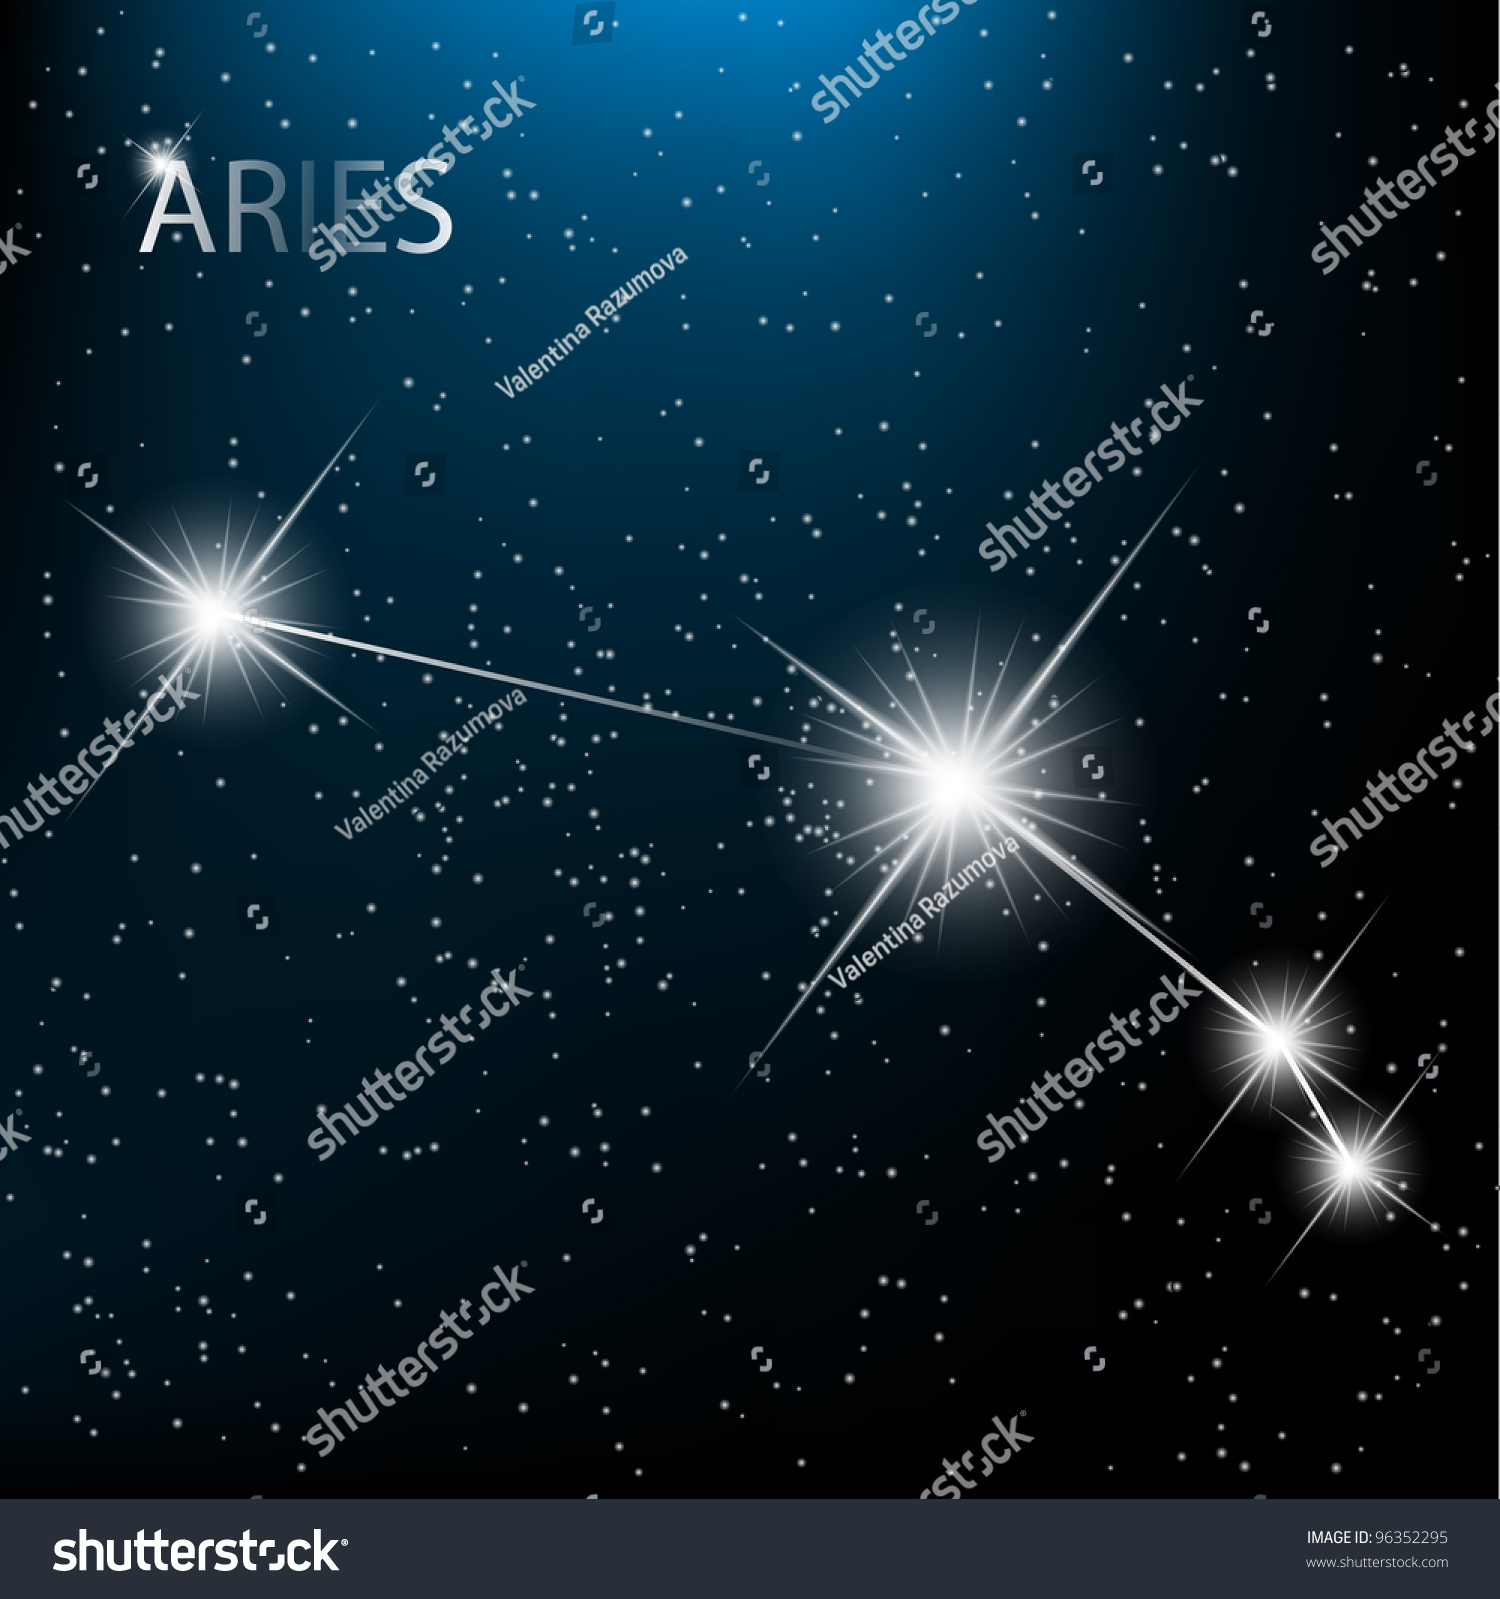 Aquarius Zodiac Sign Bright Stars Cosmos Stock Illustration 96352295 ...